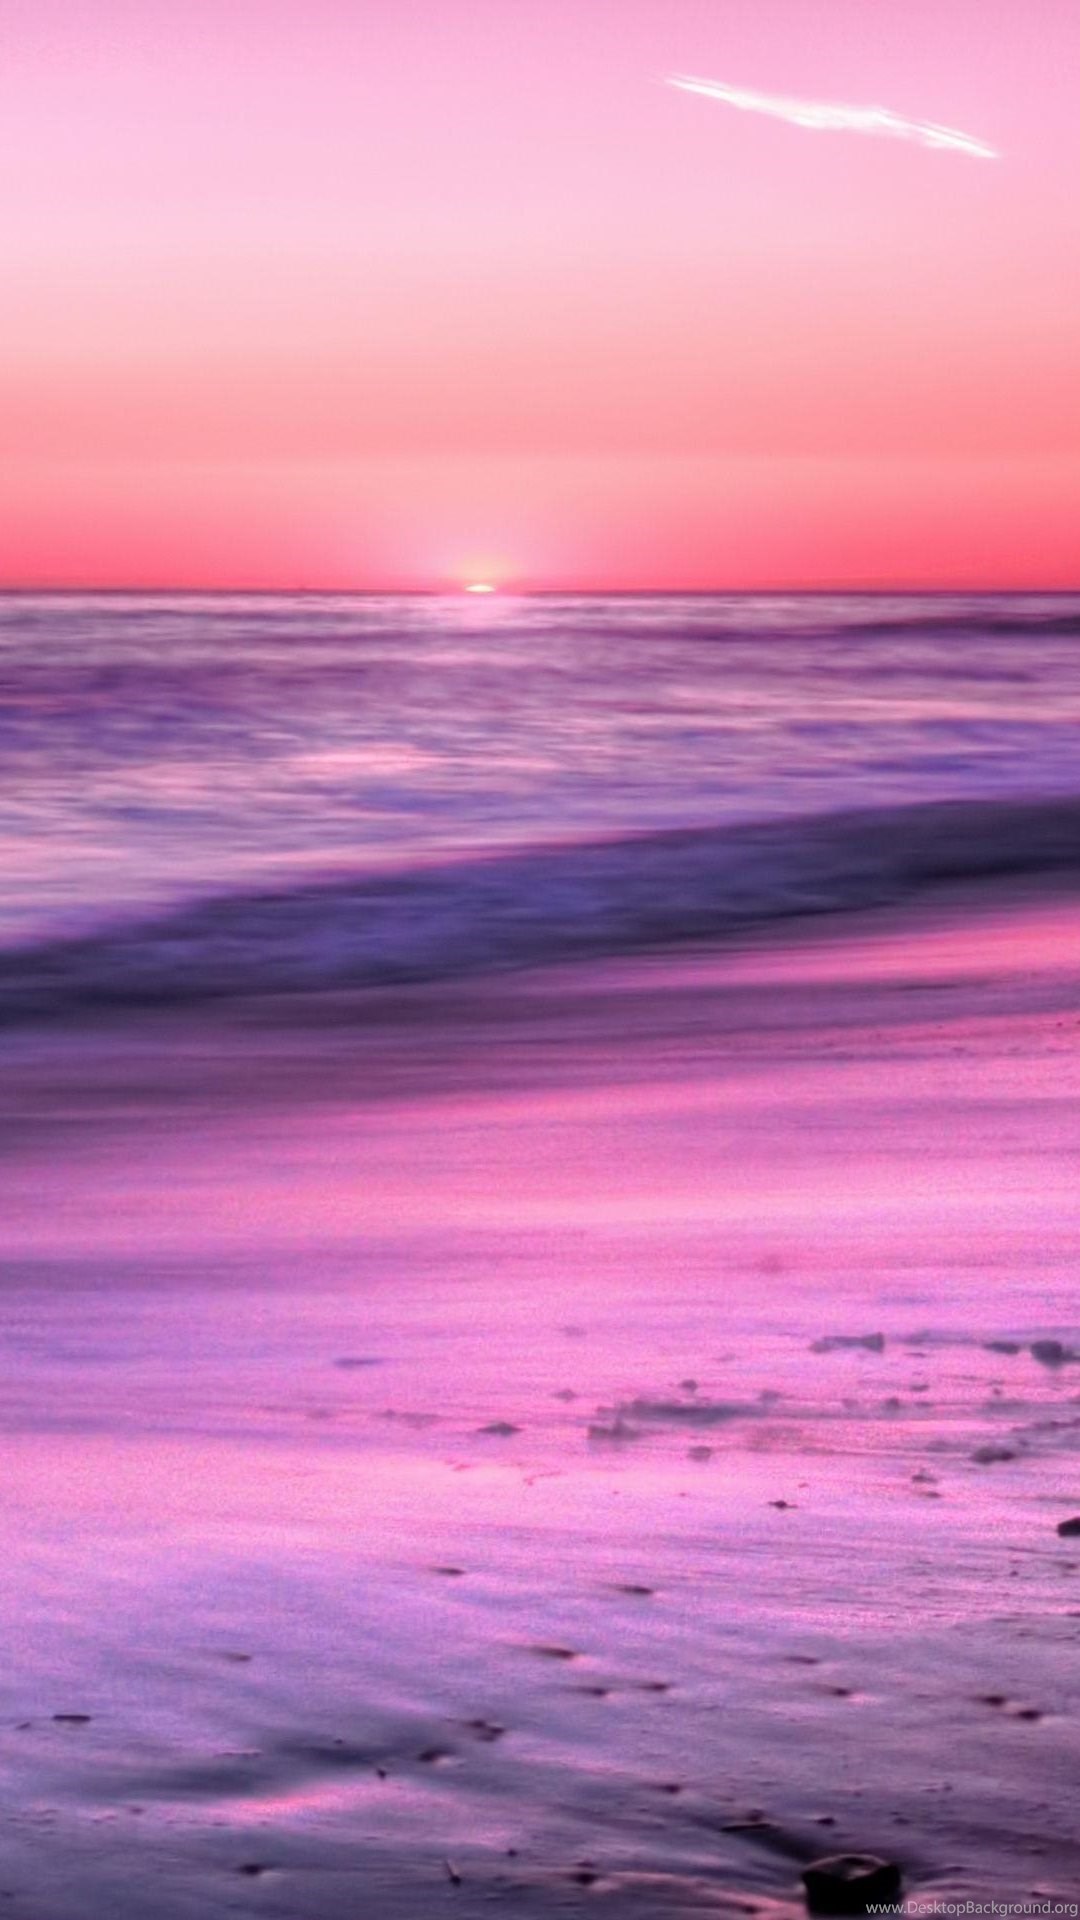 Sunrise Horizon Calm Sea Beach Android Wallpaper Free Download Desktop Background